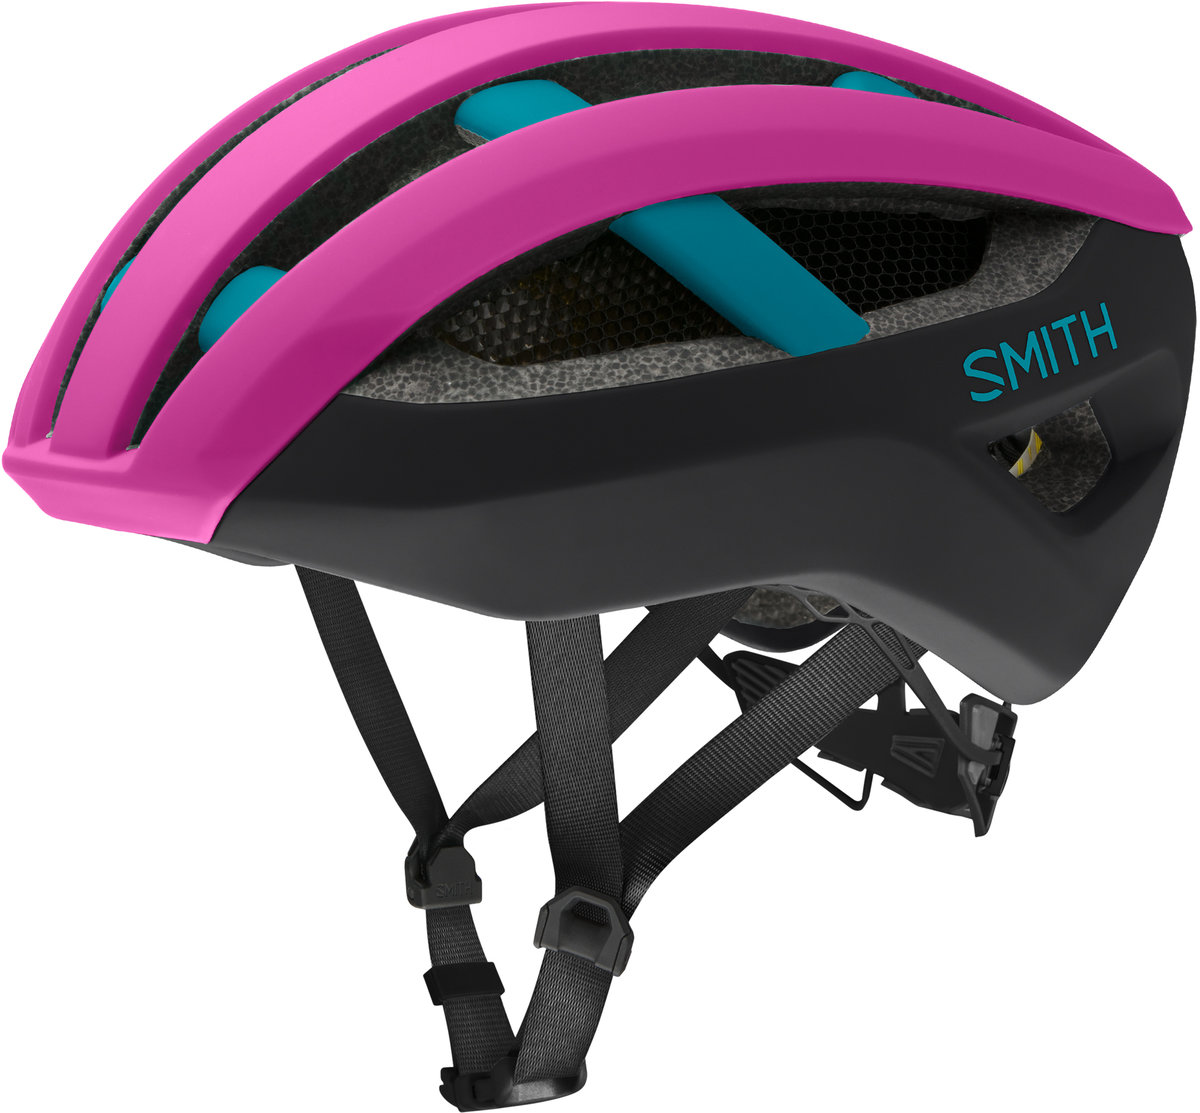 Smith Optics Network MIPS - Conte's Bike Shop | Since 1957